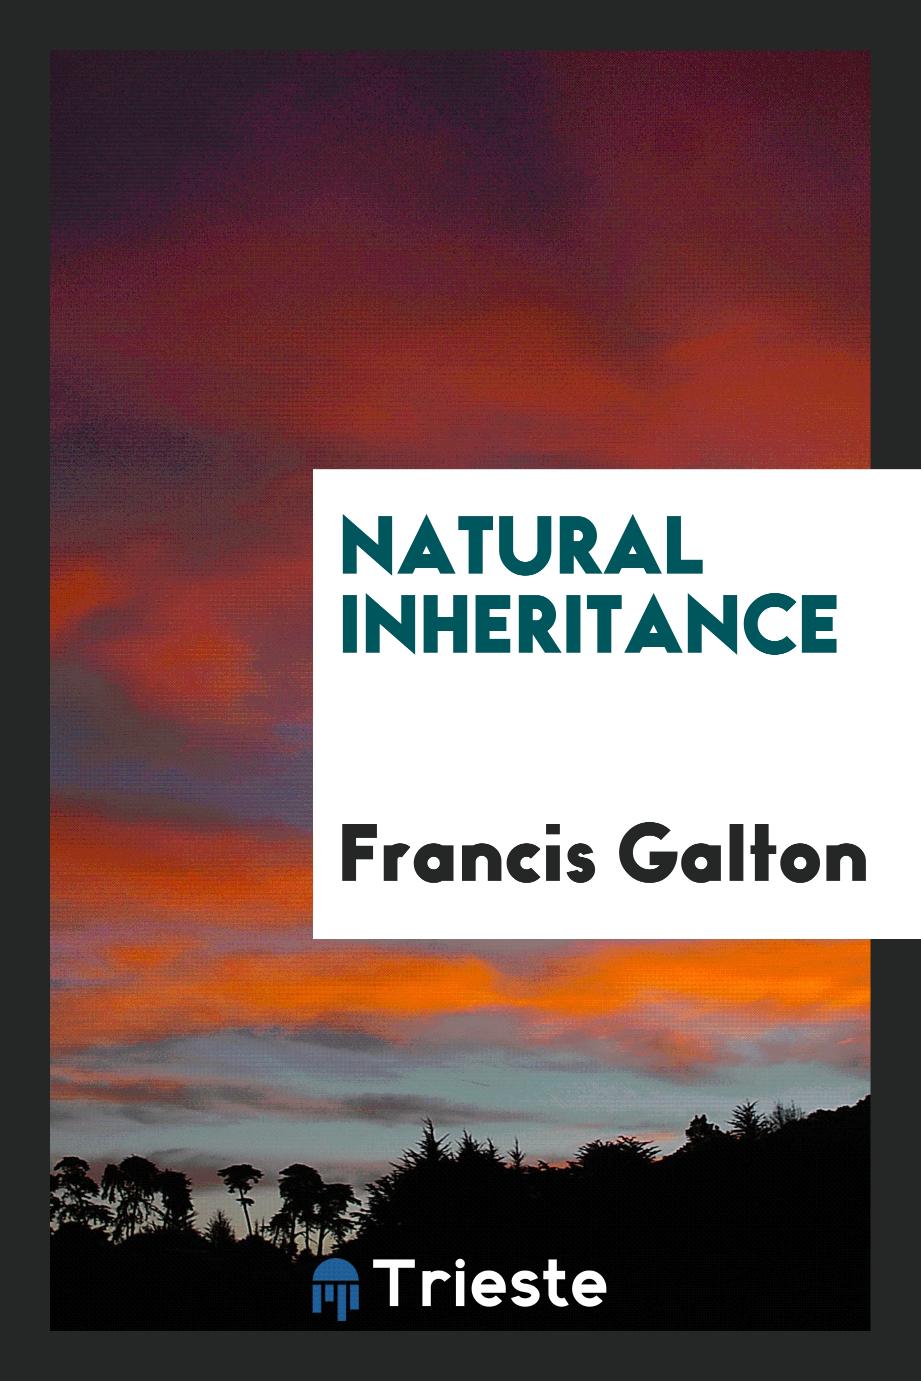 Natural inheritance